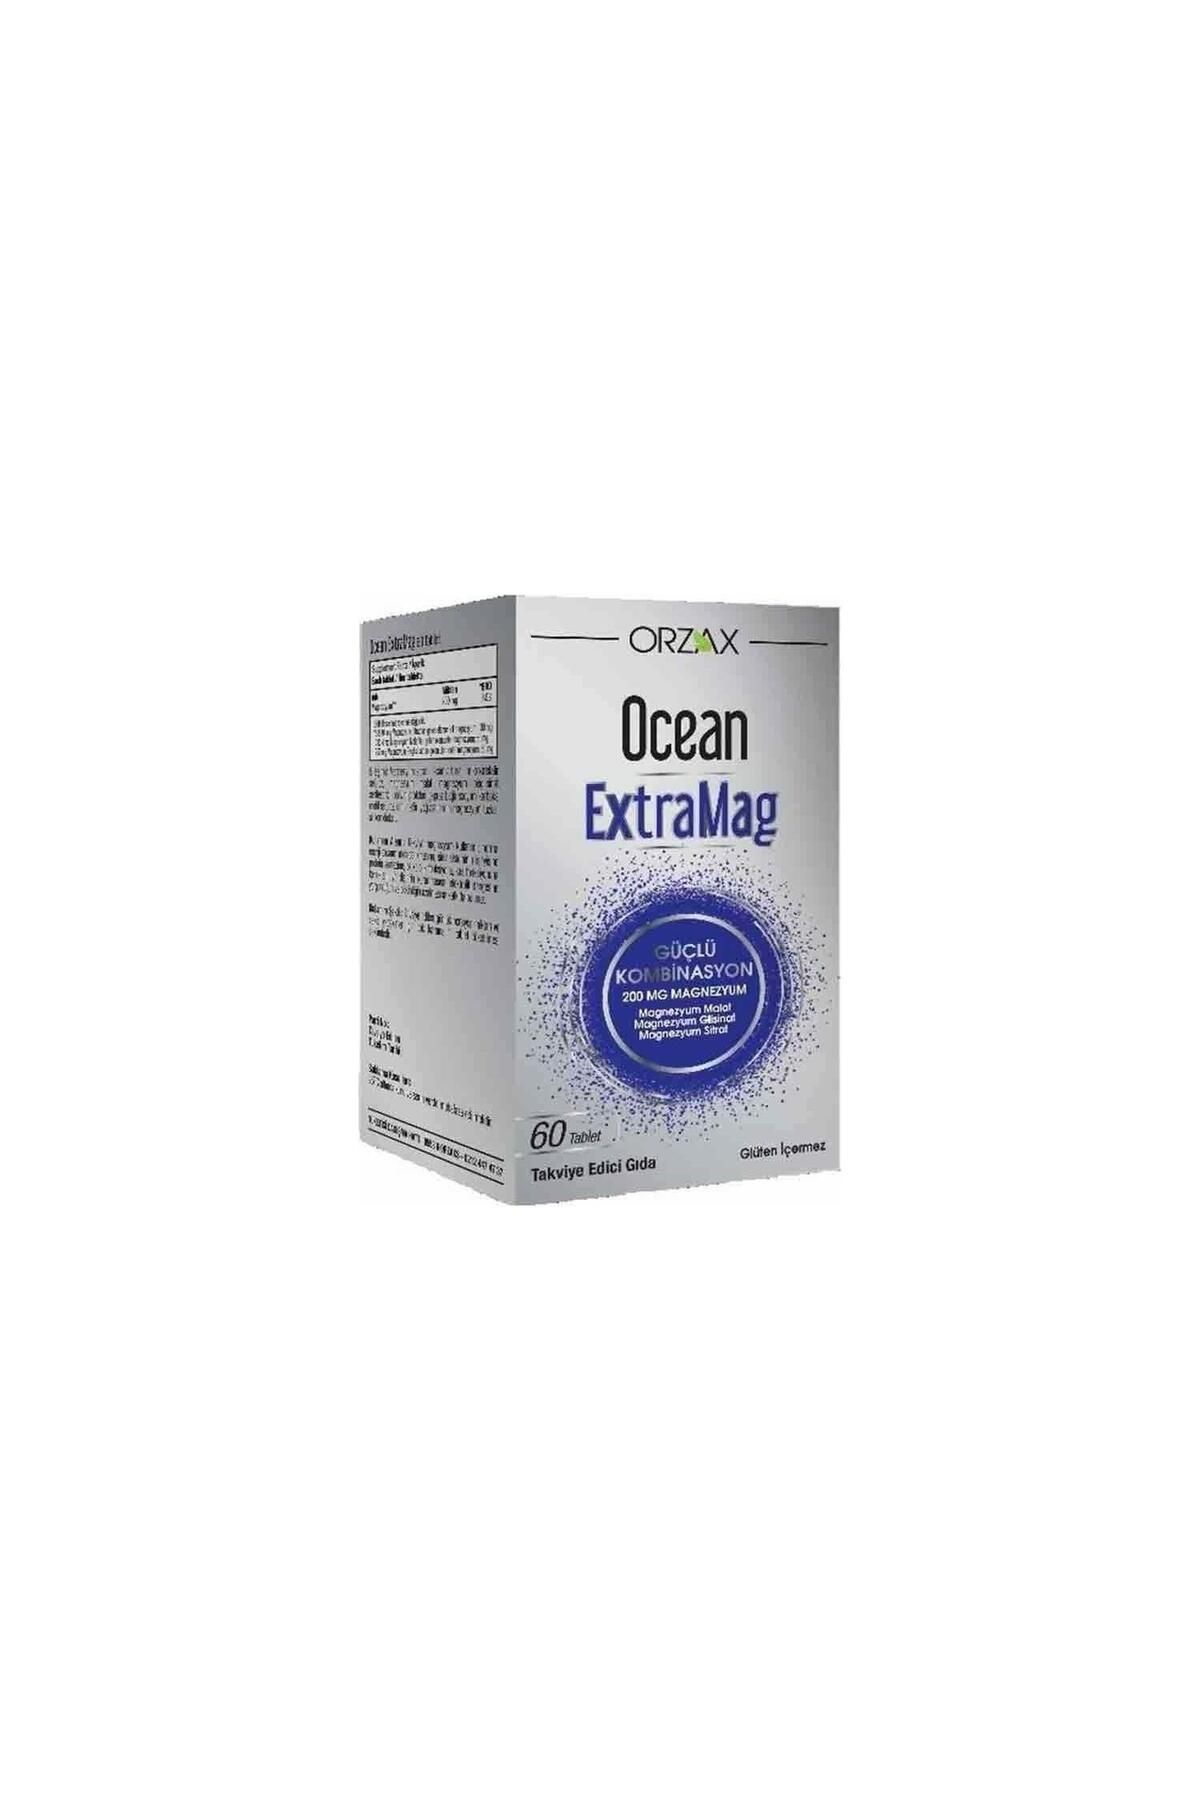 Ocean Orzax Extramag Üçlü Kombinasyon 60 Tablet